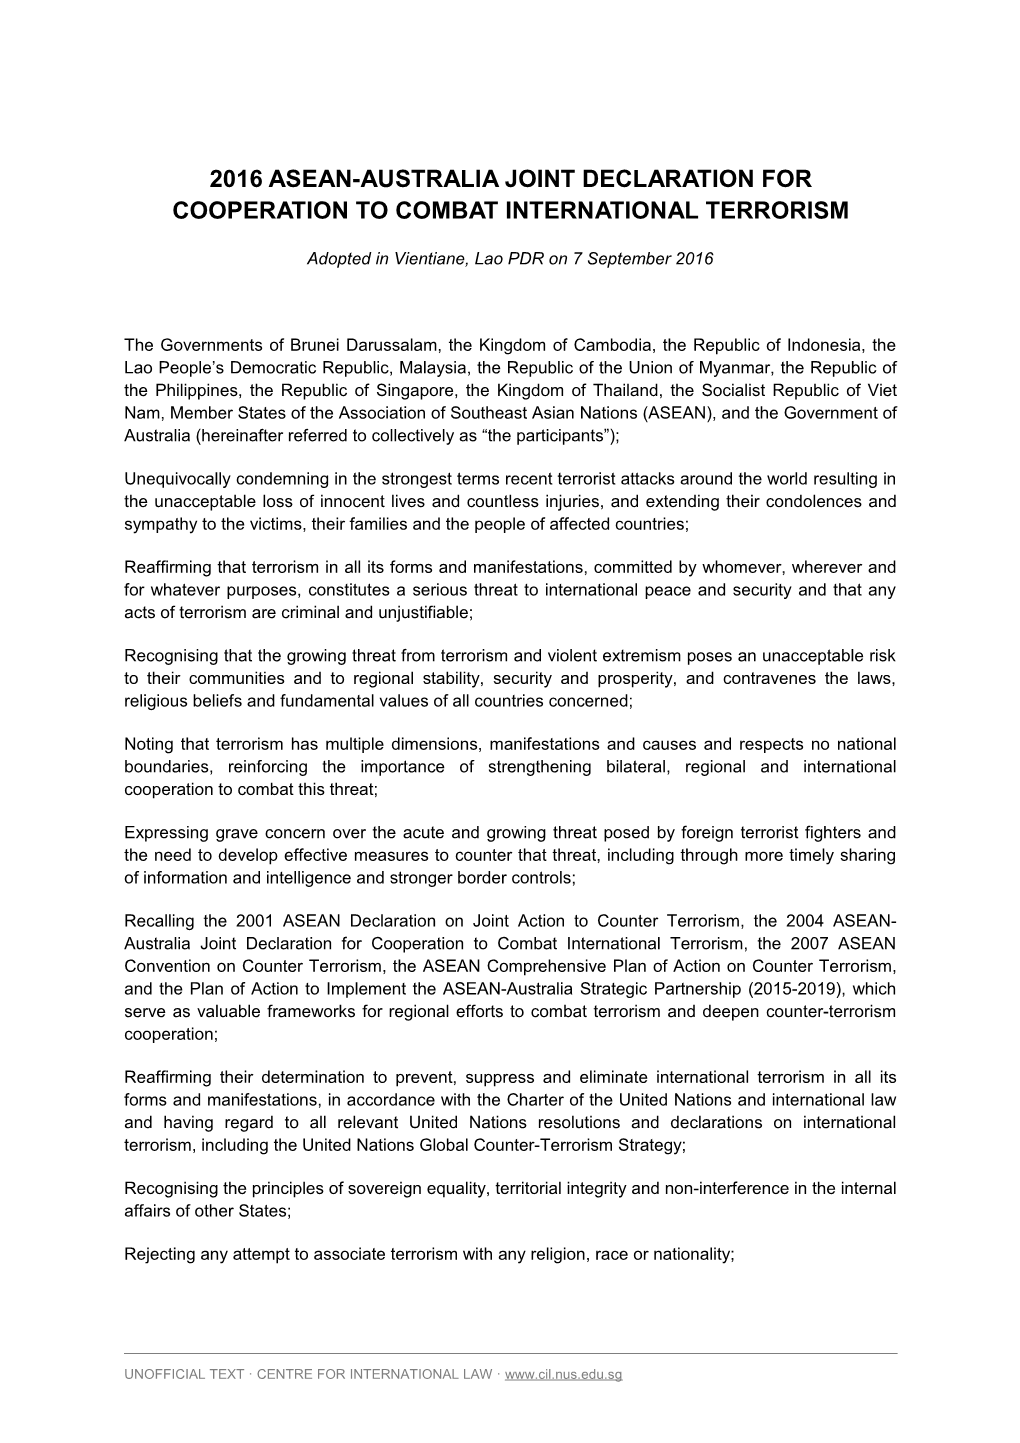 2016 ASEAN-Australia Joint Declaration for Cooperation to Combat International Terrorism